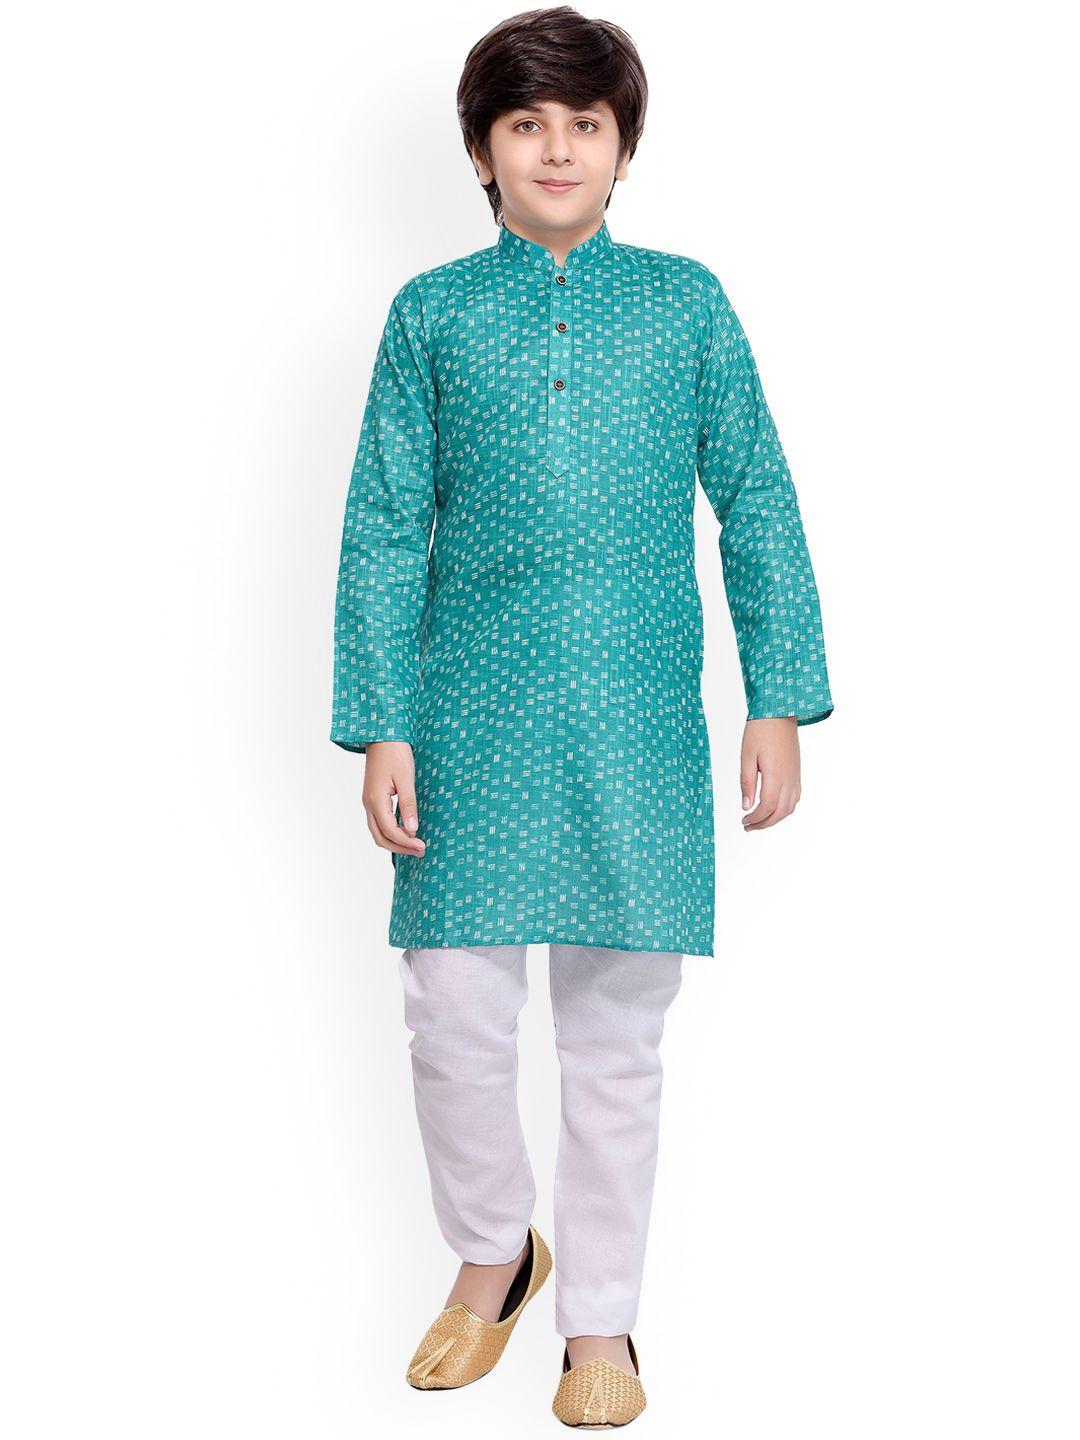 jeetethnics boys turquoise blue & white printed regular kurta with pyjamas